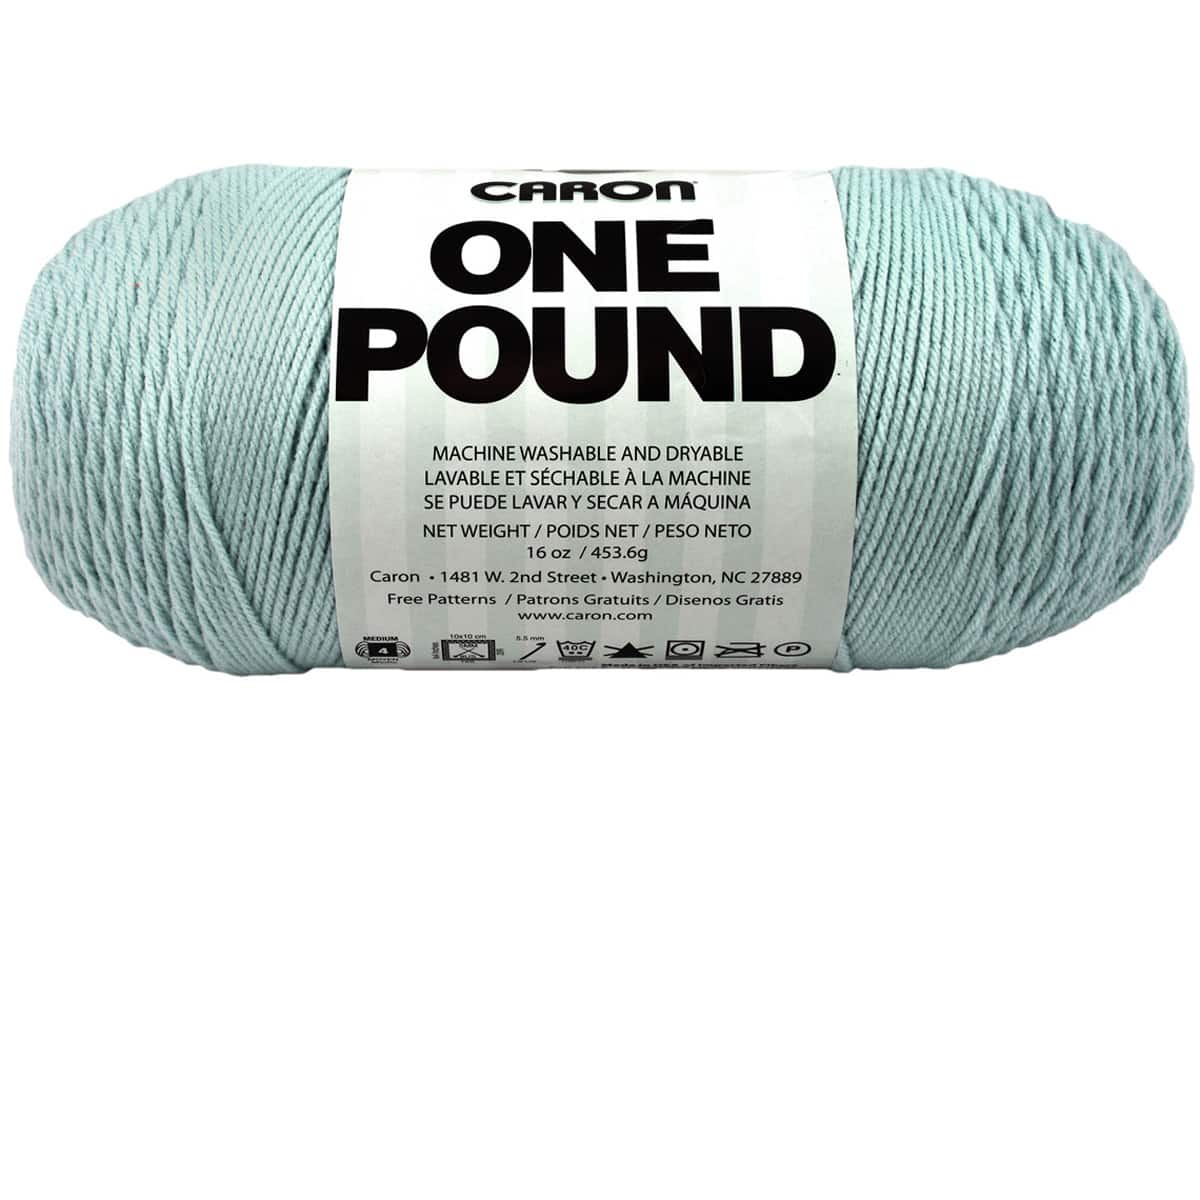 Caron One Pound Yarn Review